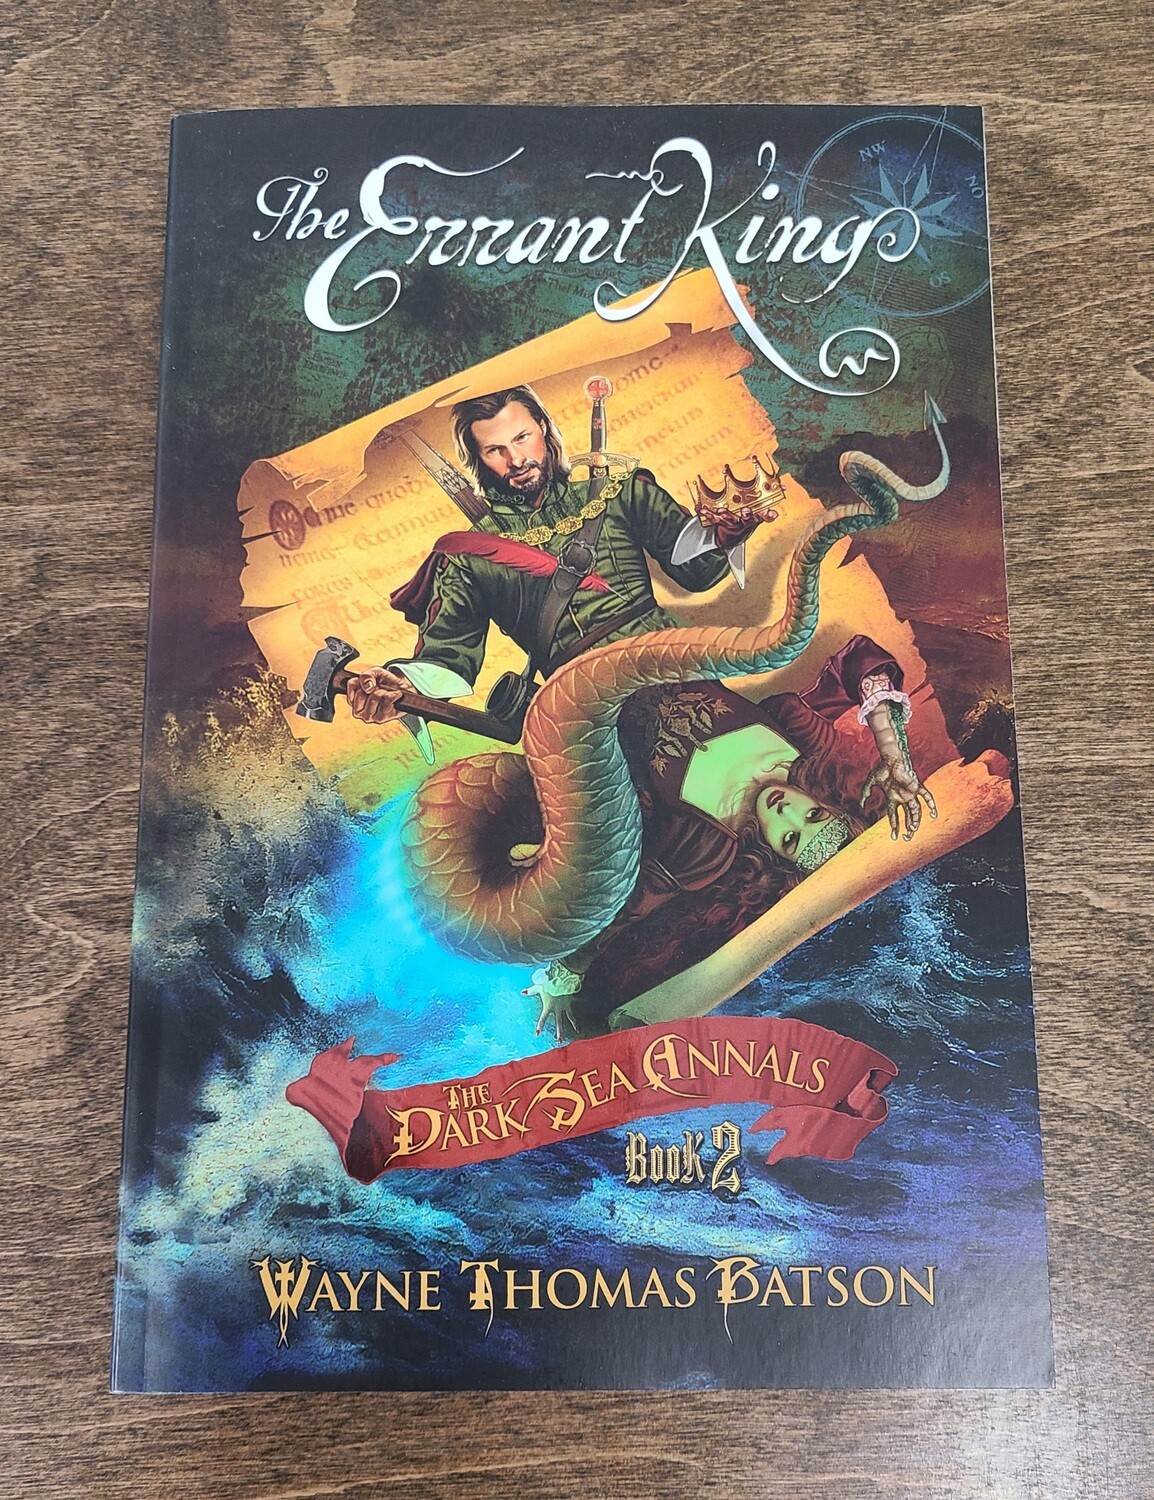 The Errant King by Wayne Thomas Batson